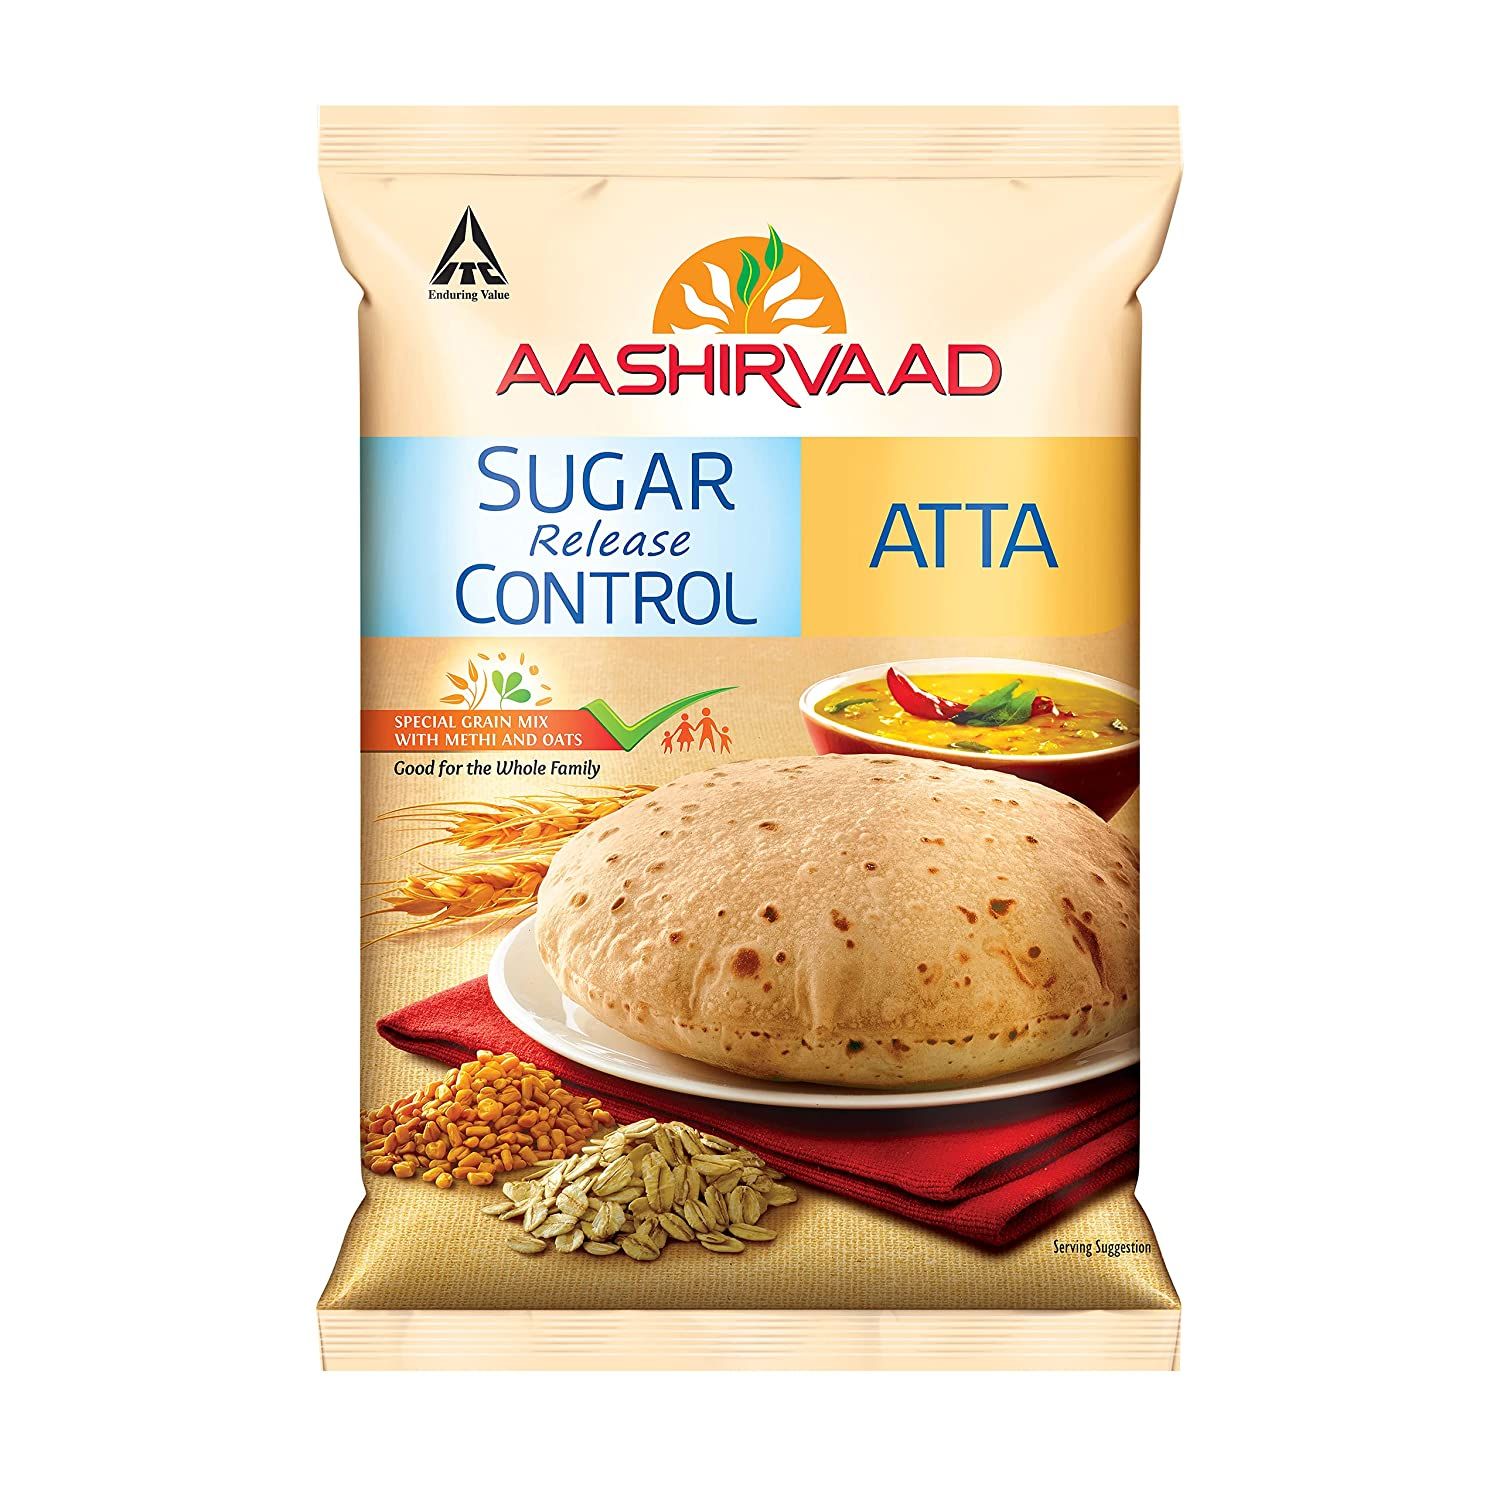 Aashirwad Sugar Release Control Atta Image